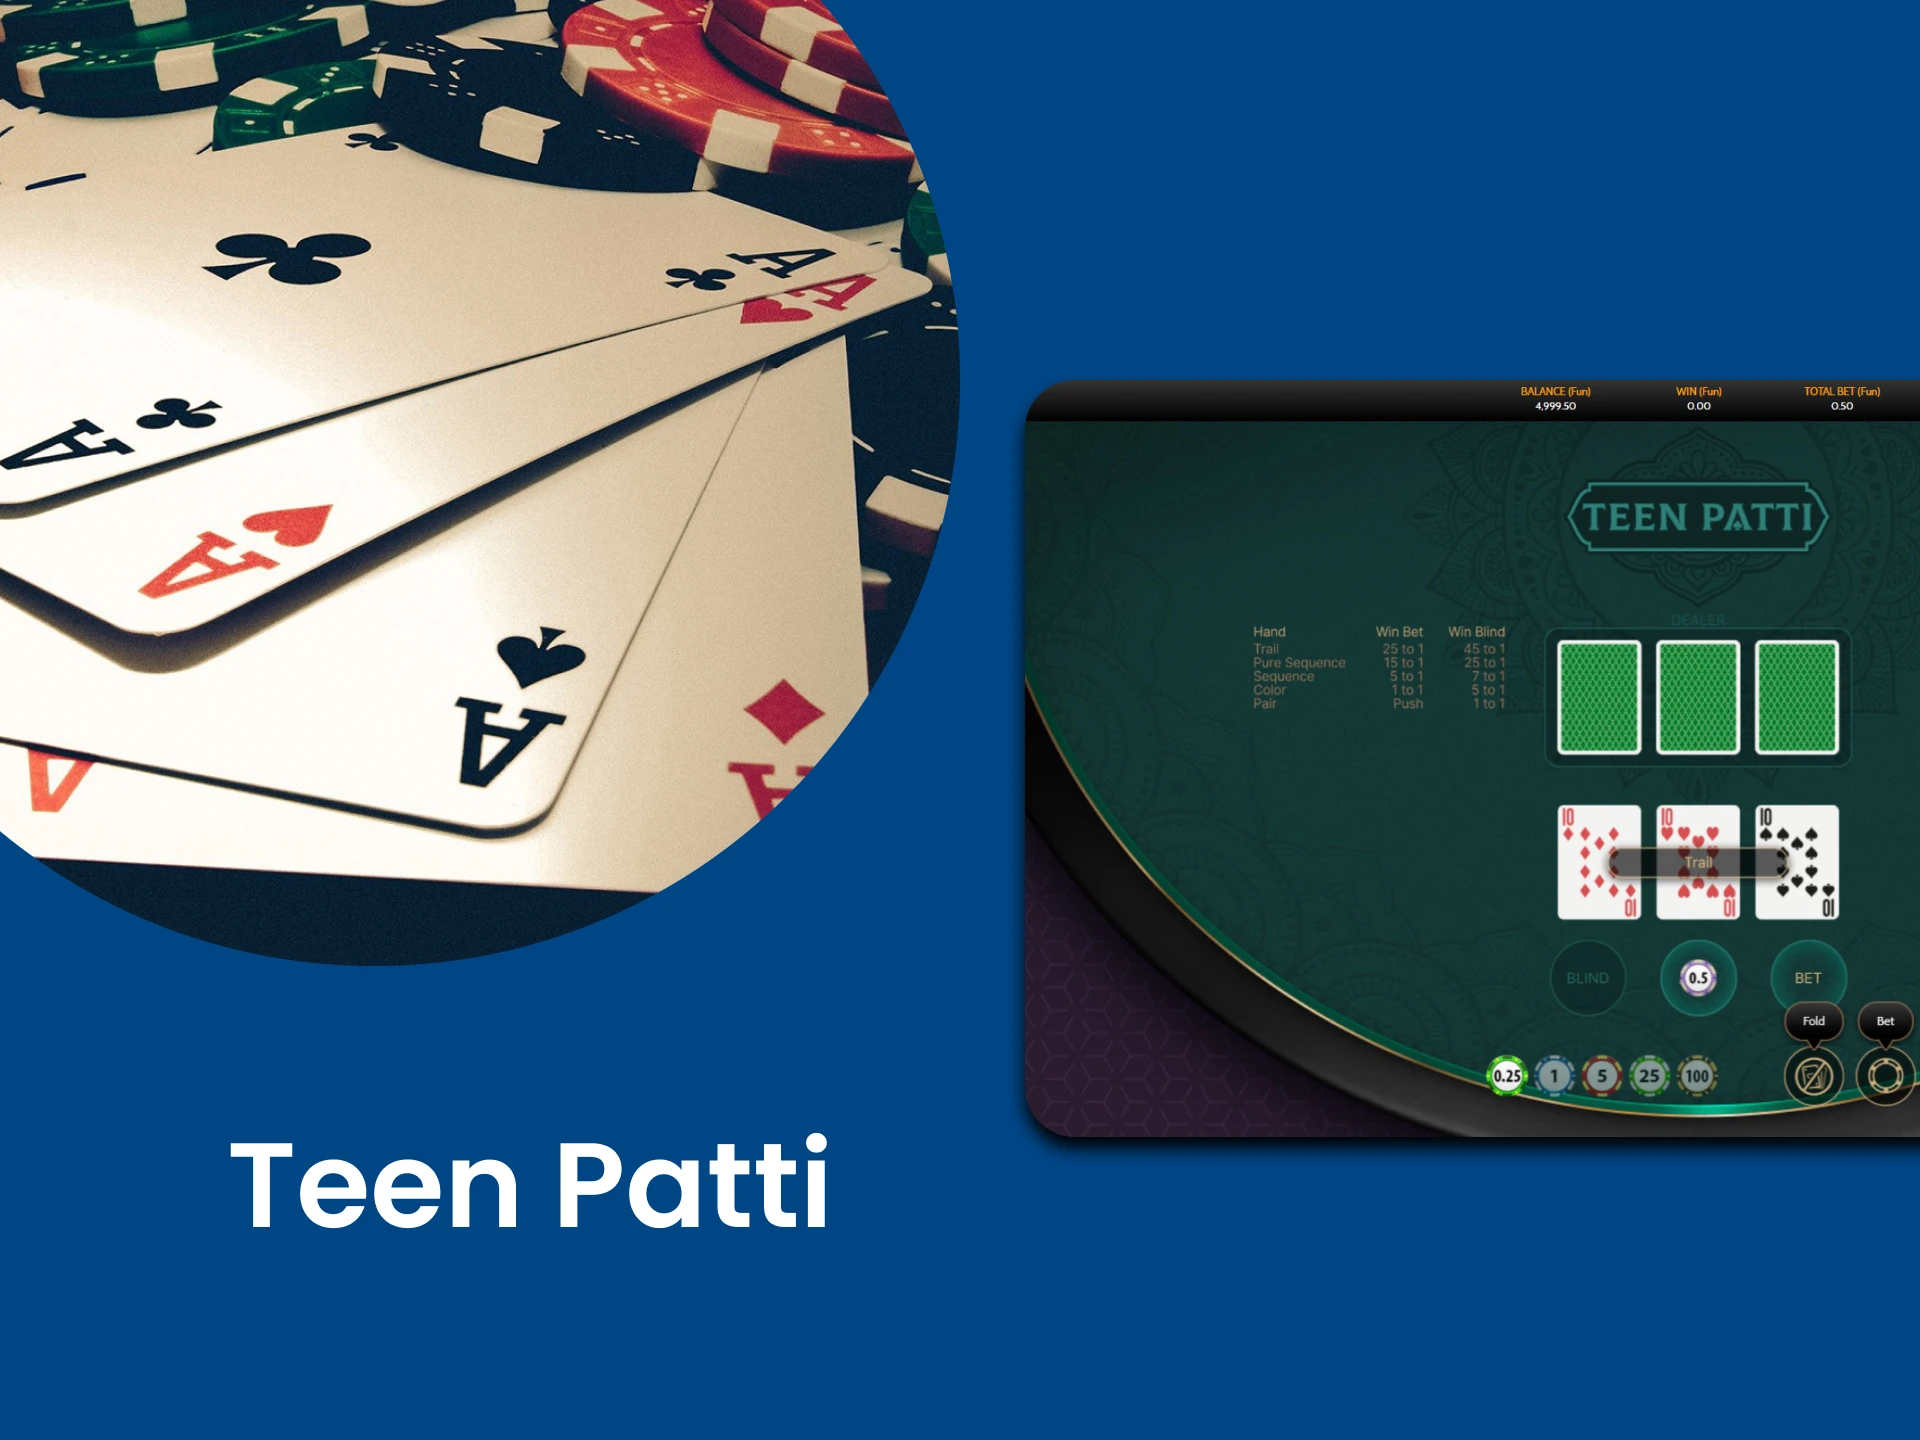 For casino games, choose Teen Patti.